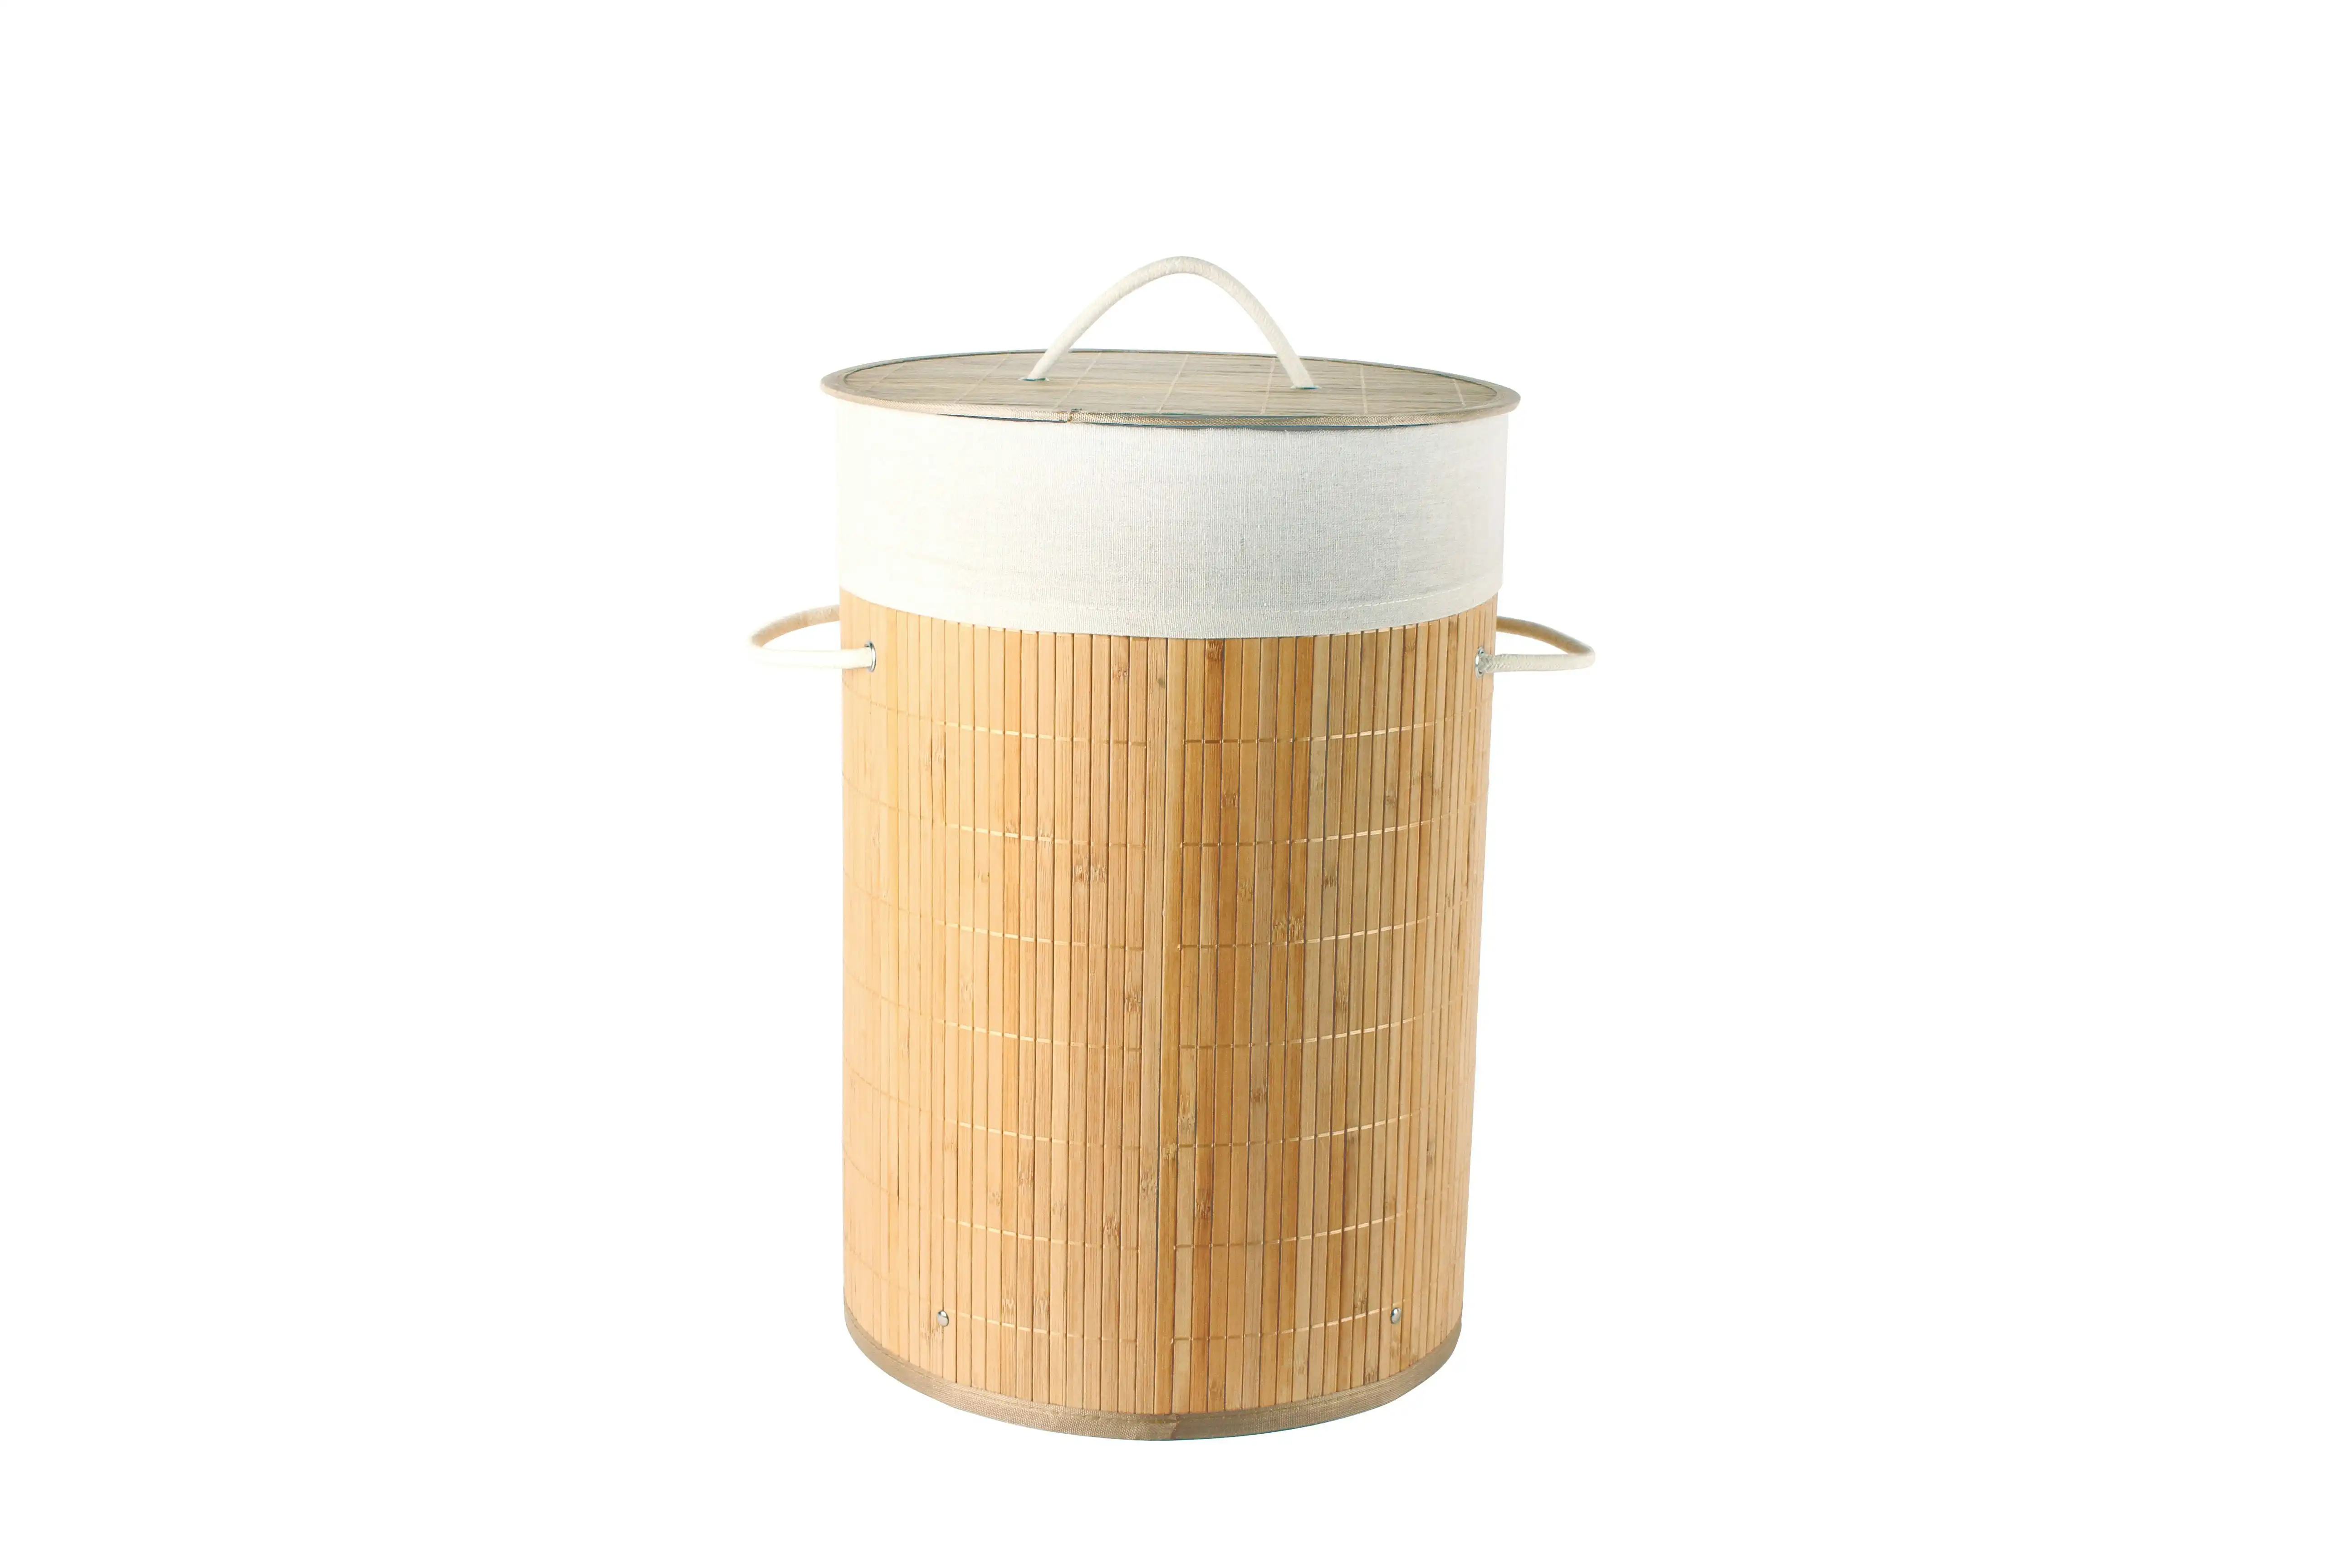 Kalib Bamboo Laundry Basket With Lining 60 x 38cm